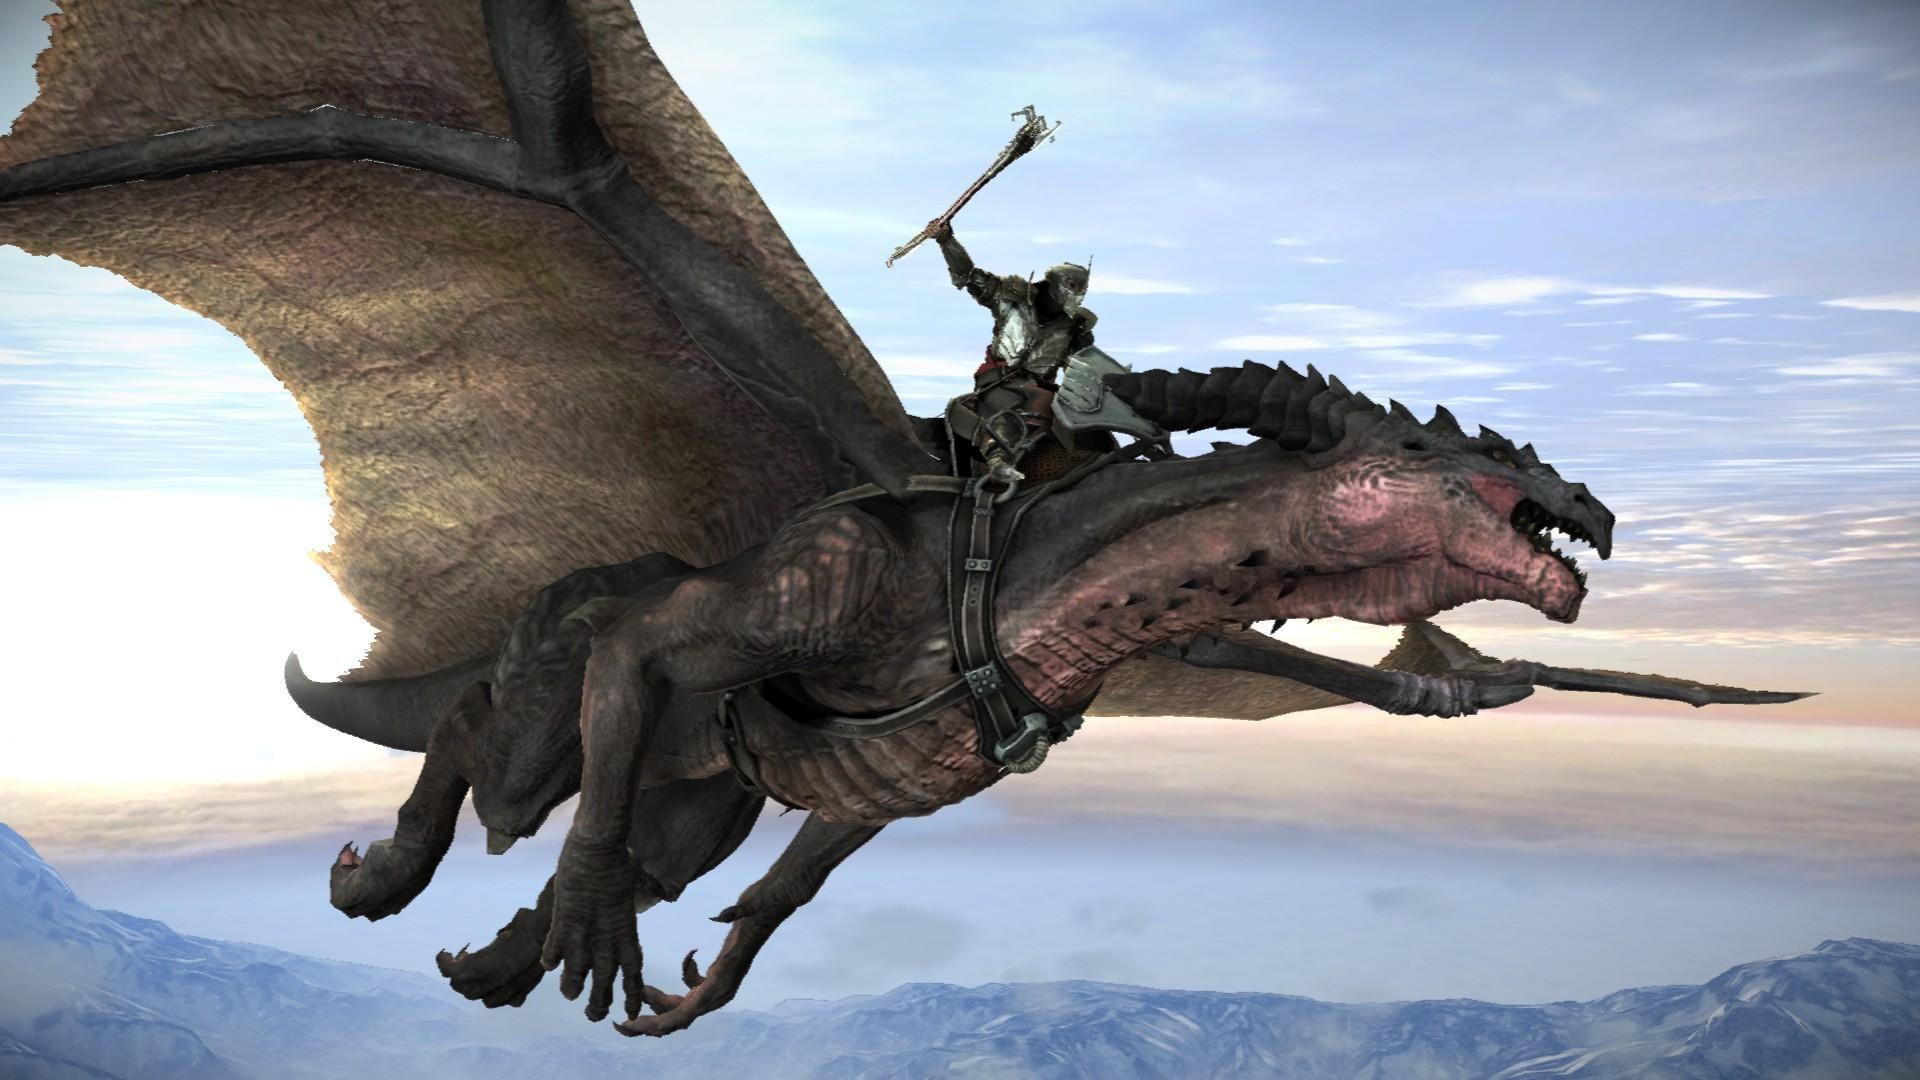 Dragon flying in dreams free desktop background wallpaper image